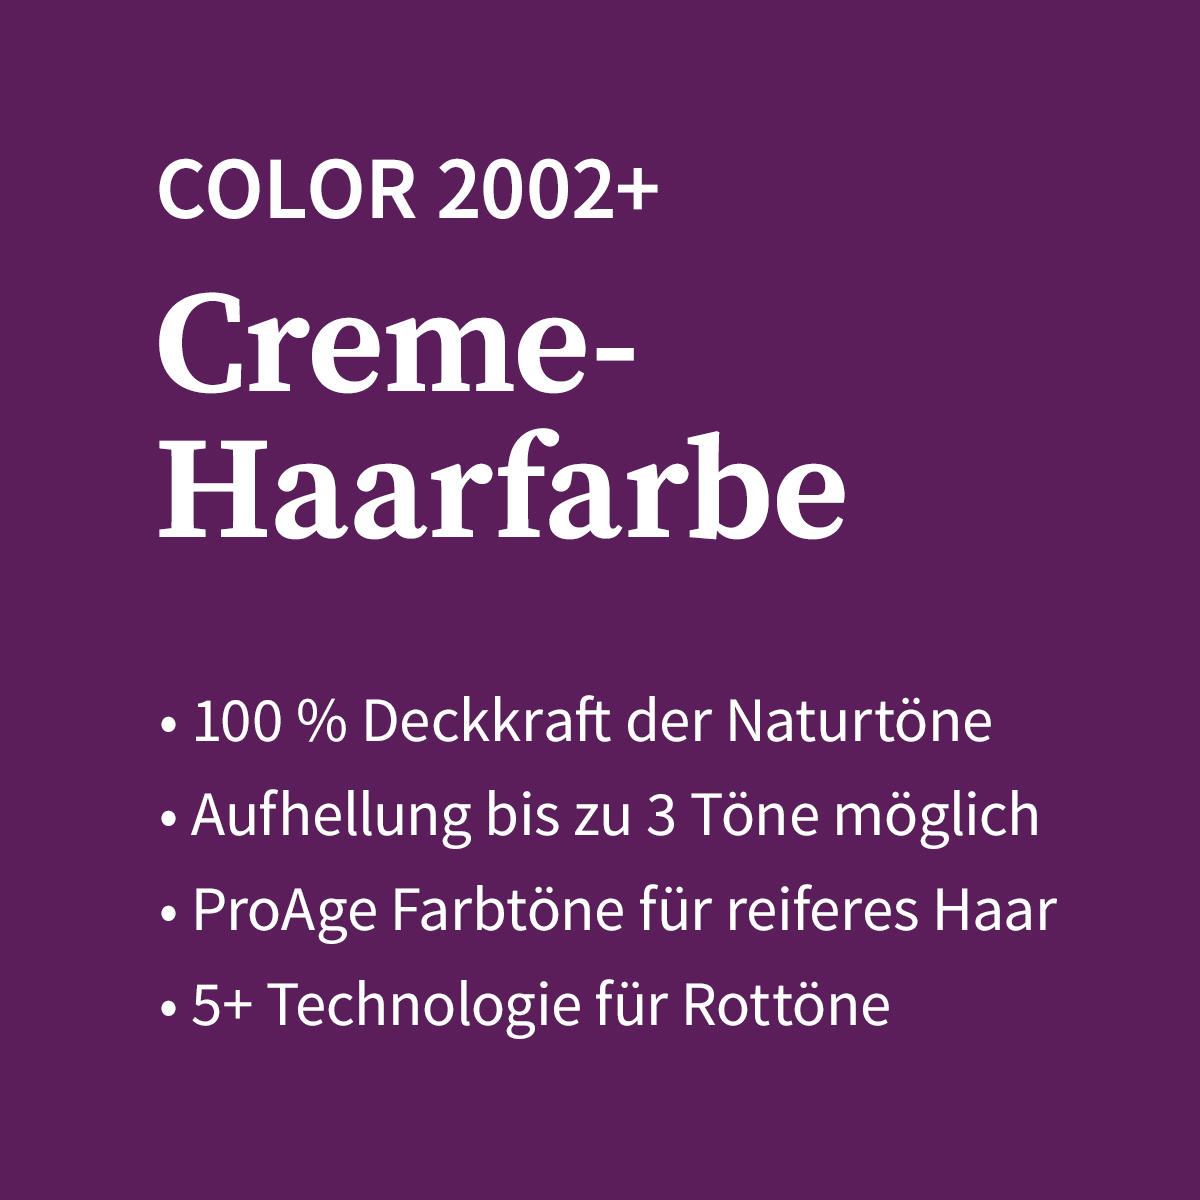 Basler Color 2002+ Cremehaarfarbe 7/74 mittelblond braun rot, Tube 60 ml - 4